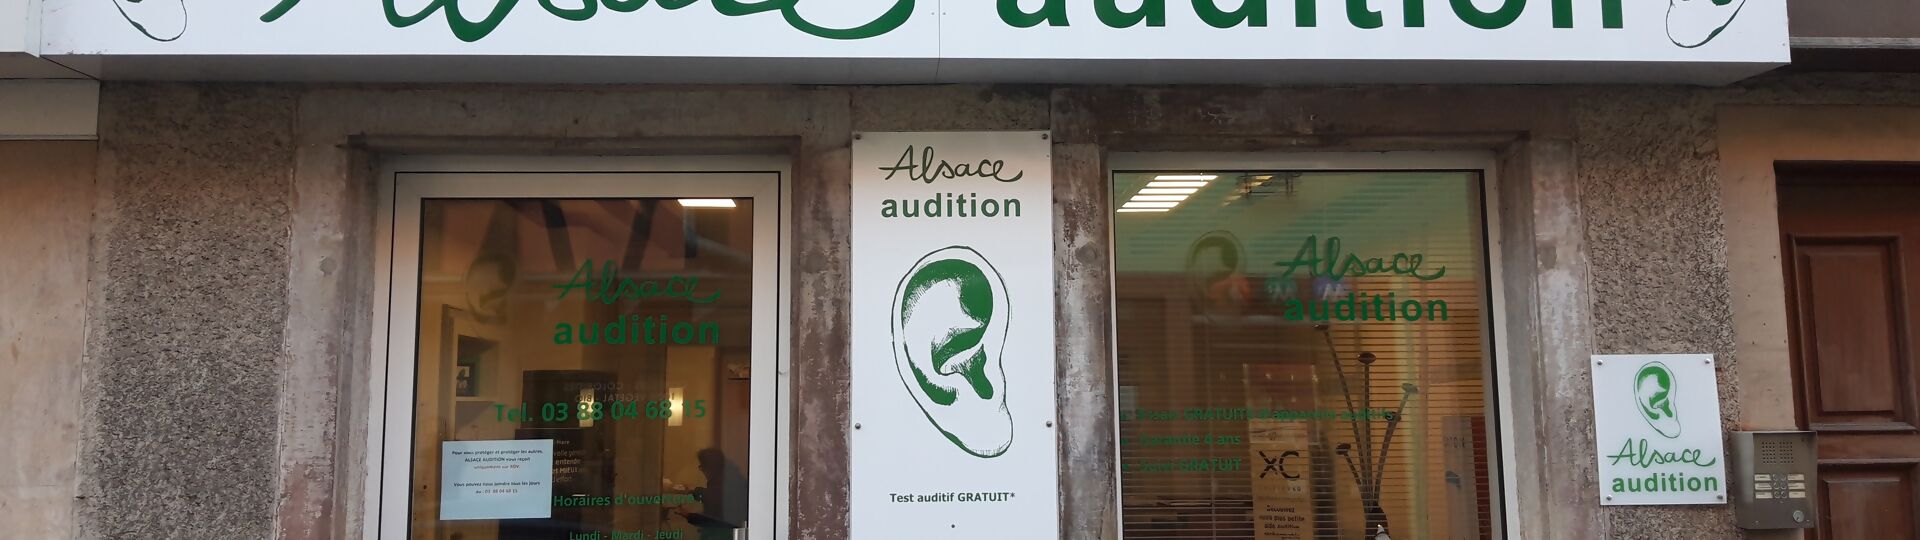 Alsace Audition-header